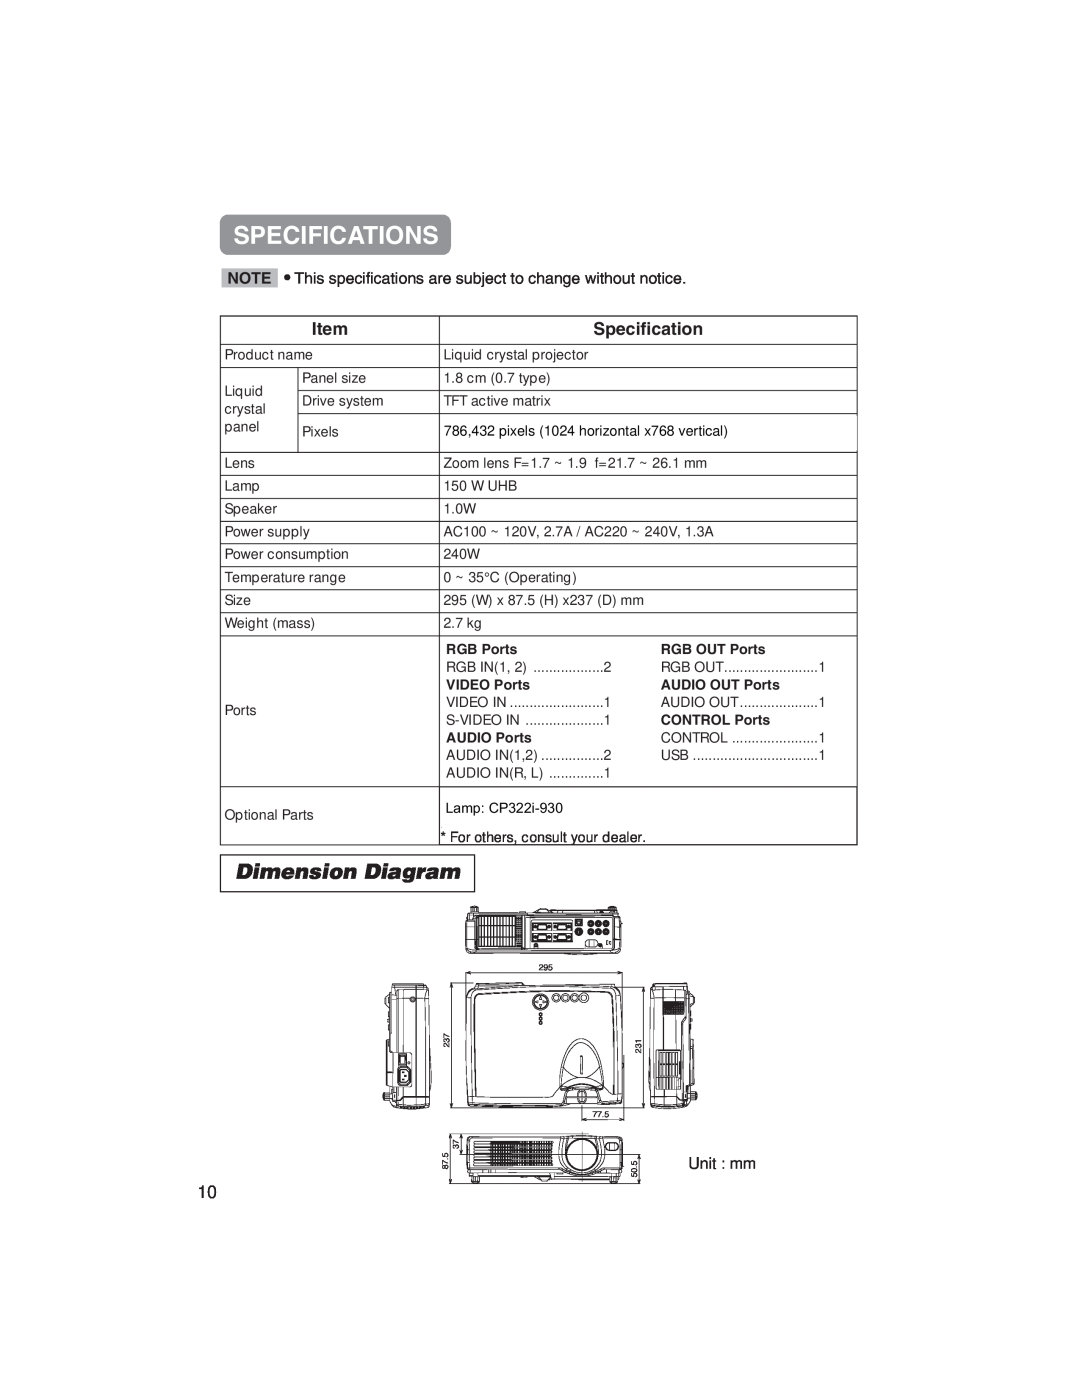 BOXLIGHT CP322ia user manual Specifications, Dimension Diagram, Lamp CP322i-930 